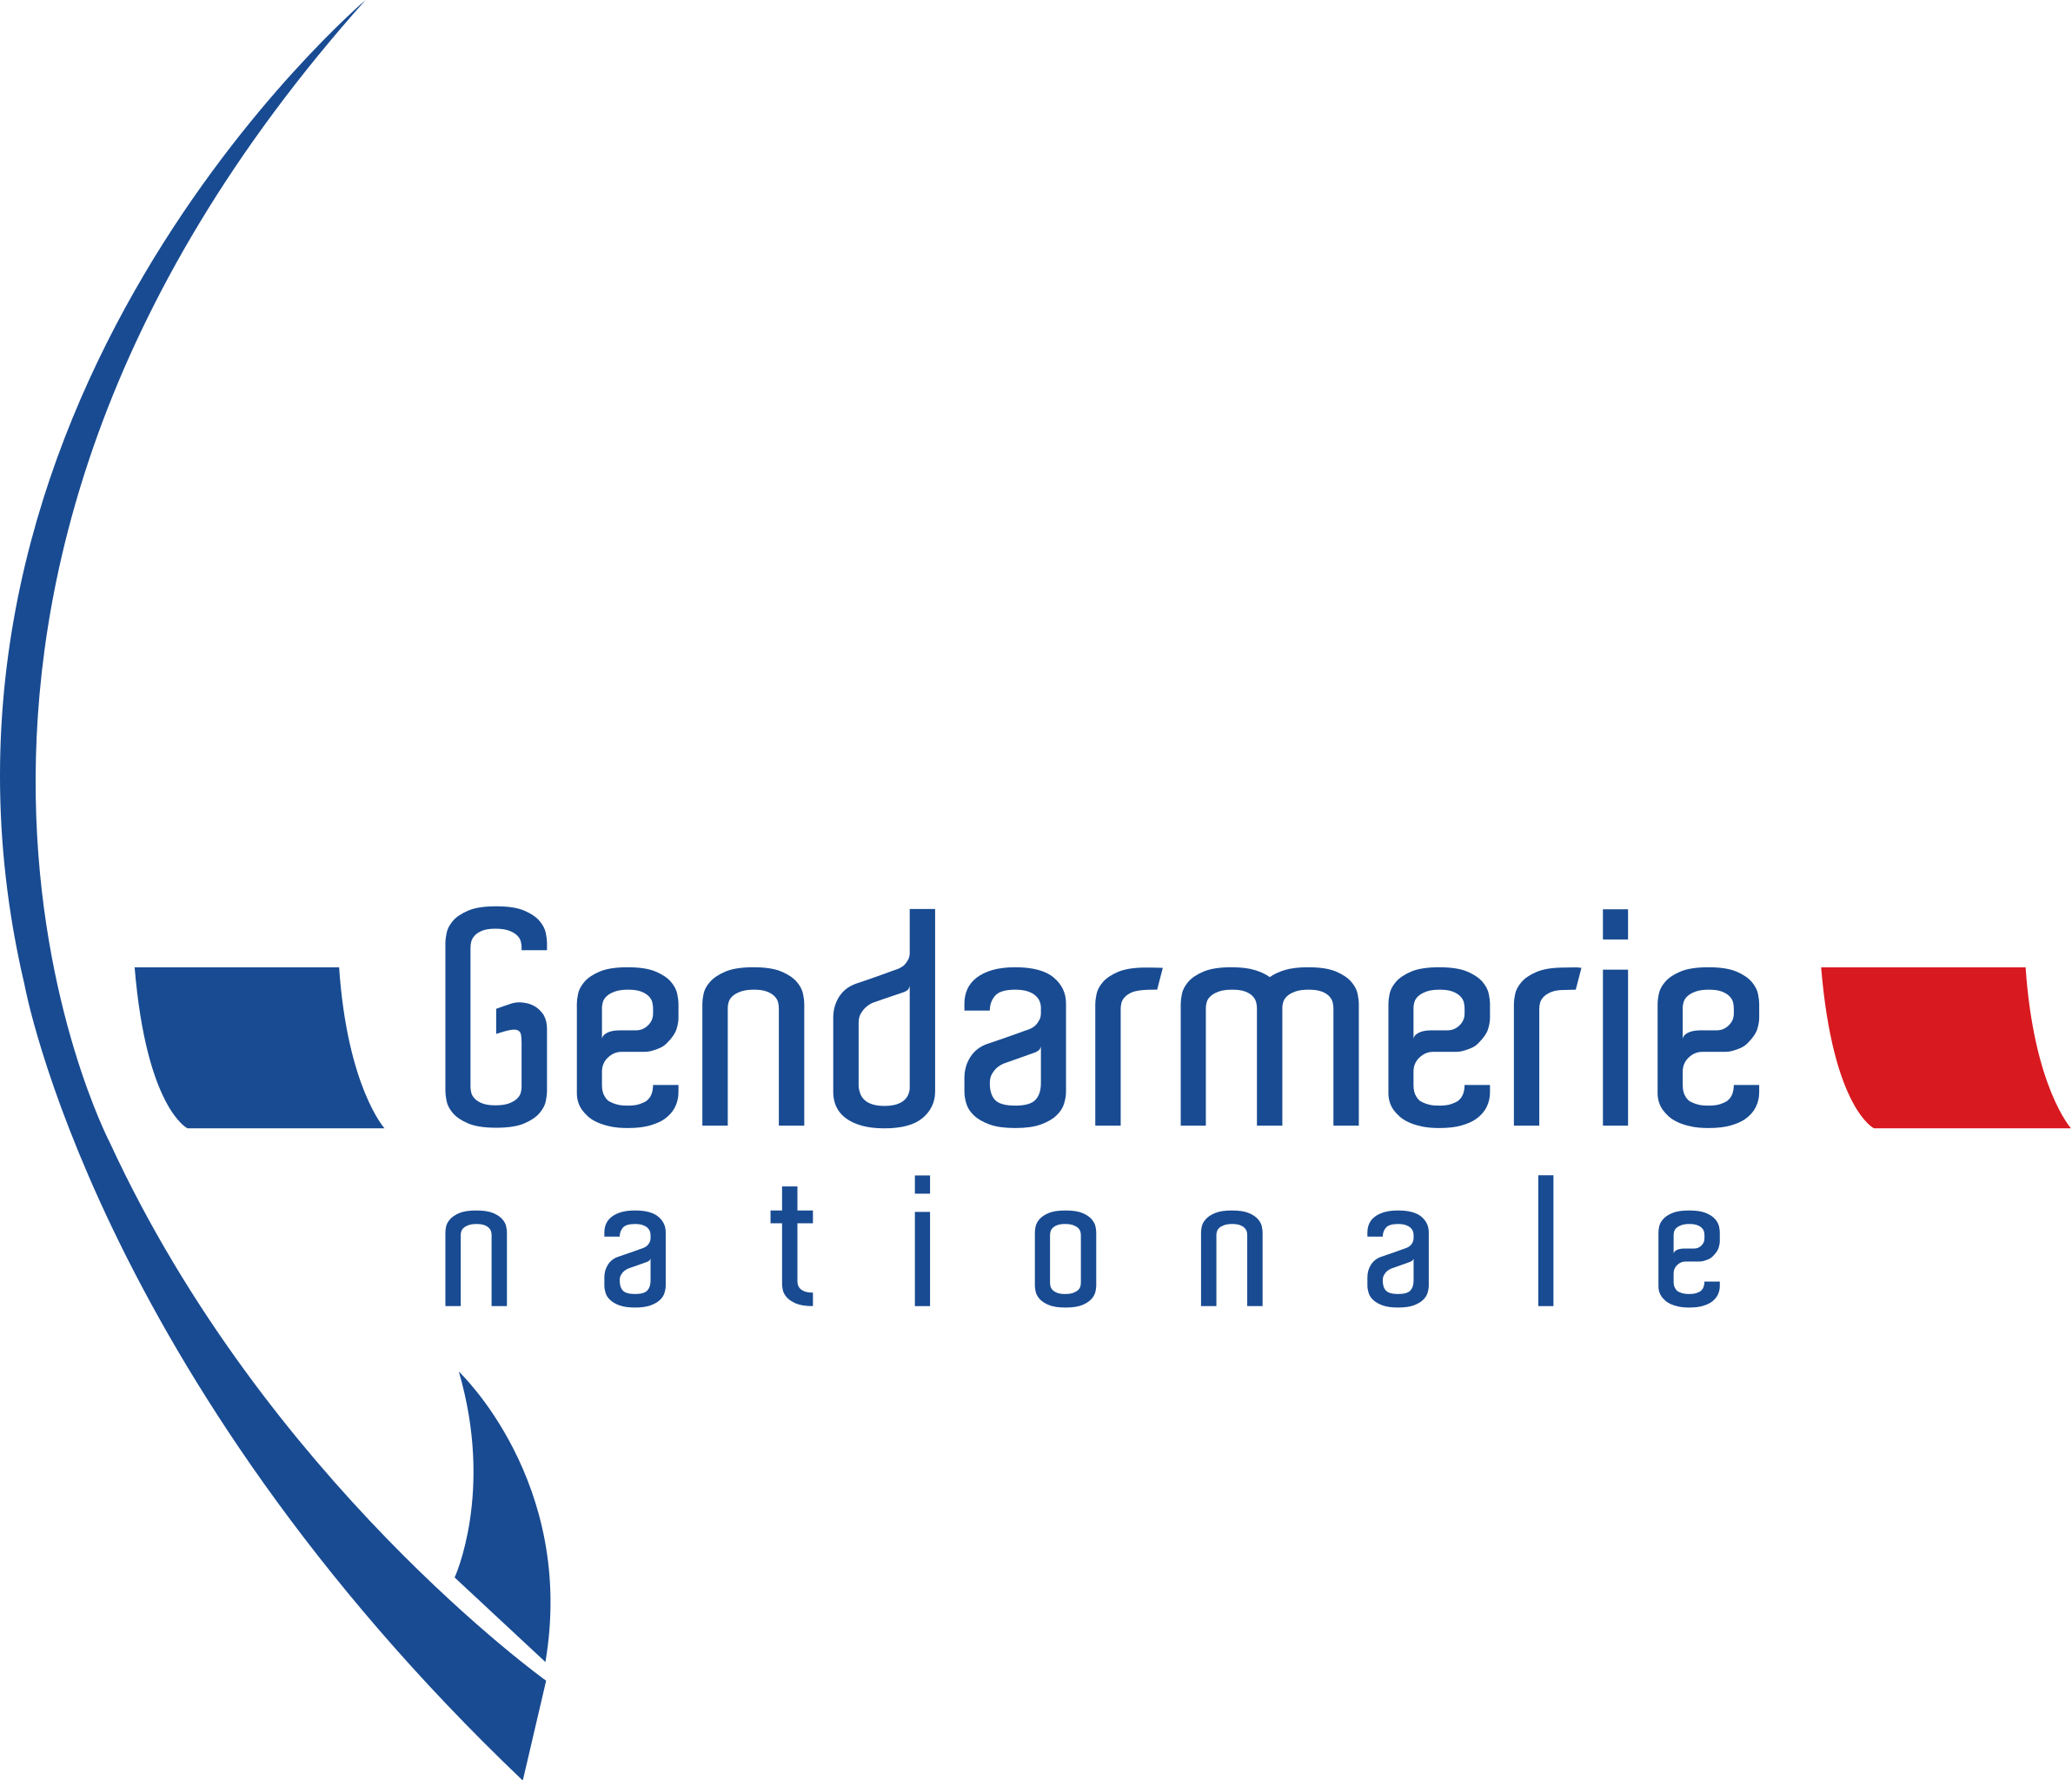 Gendarmerie logo.png